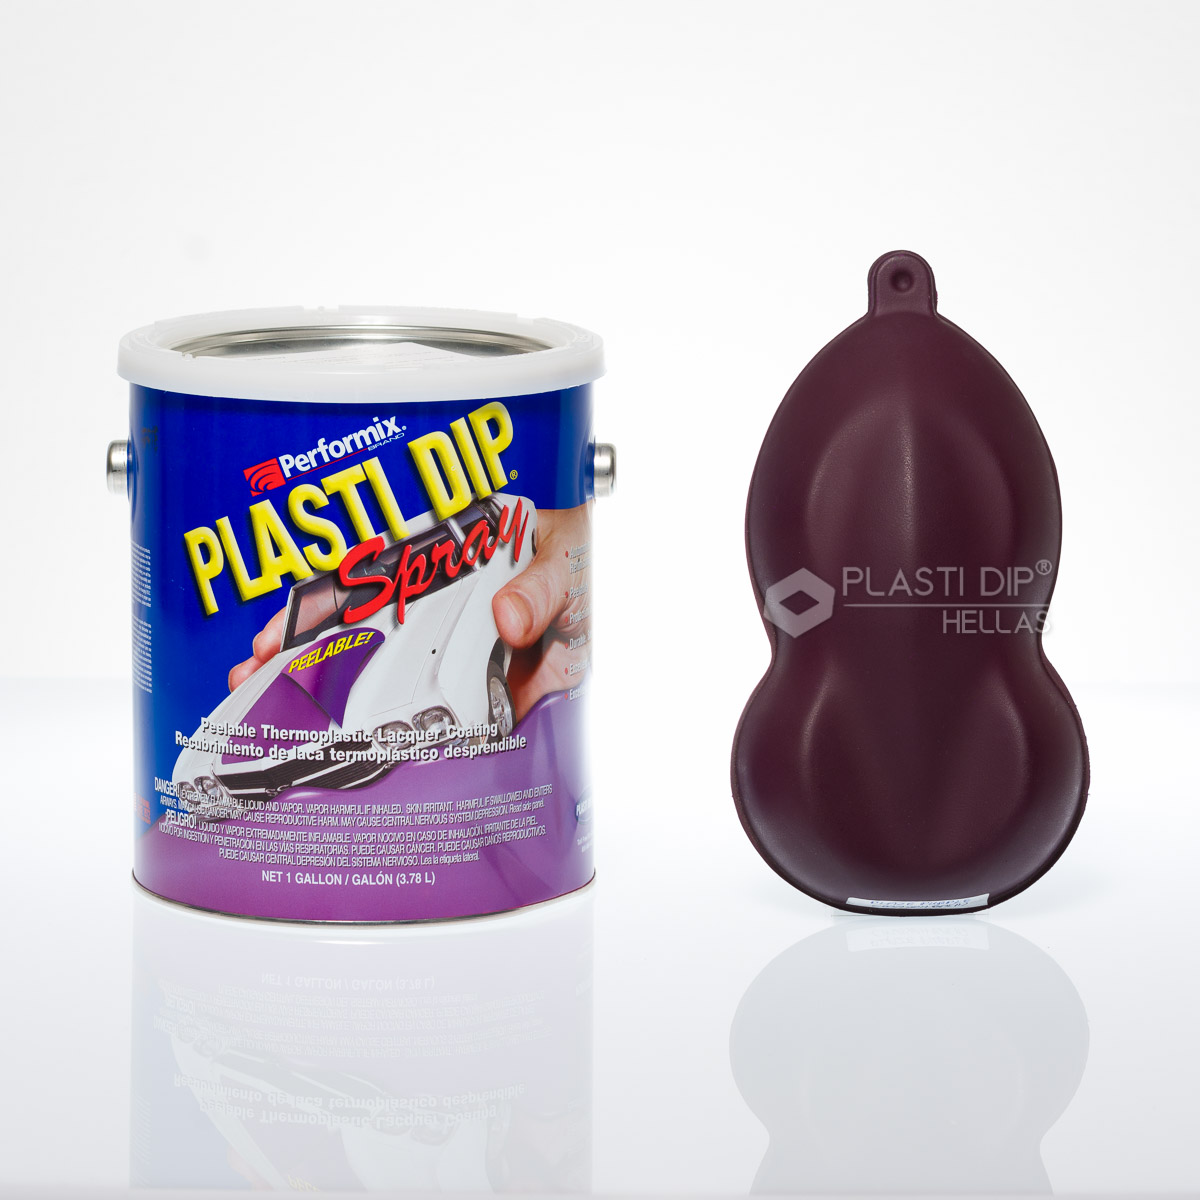 Plasti dip σε Υγρή μορφή Black Cherry Sprayable(έτοιμο για ψεκασμό)